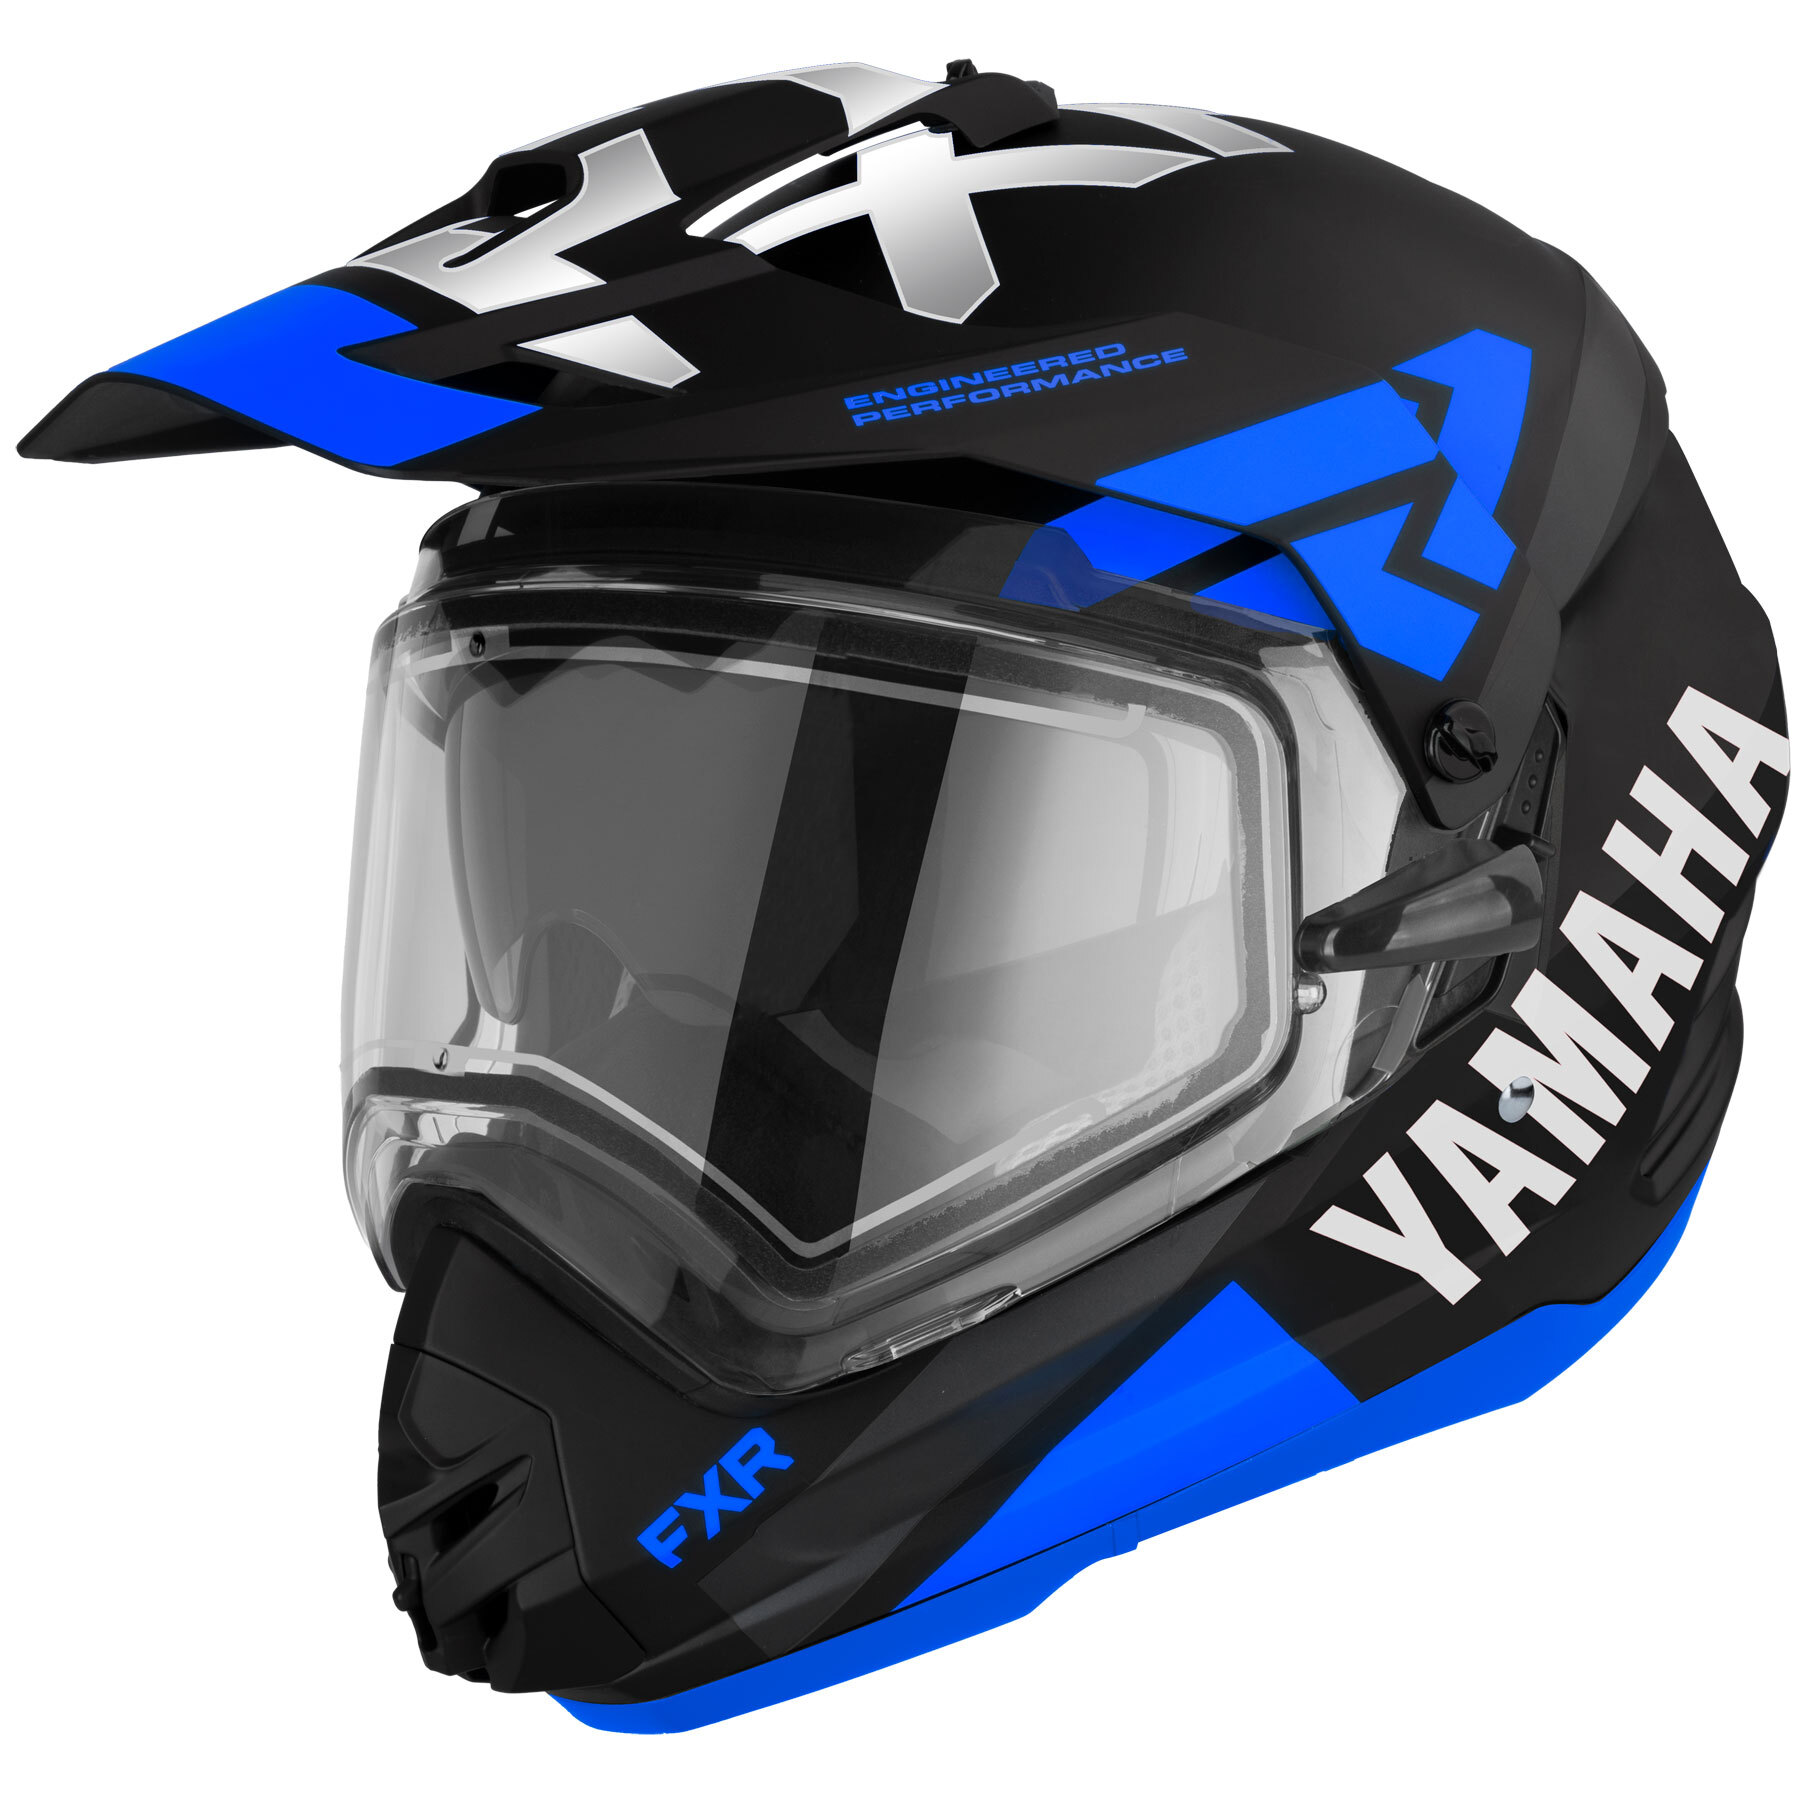 Yamaha Torque X Helmet by FXR®